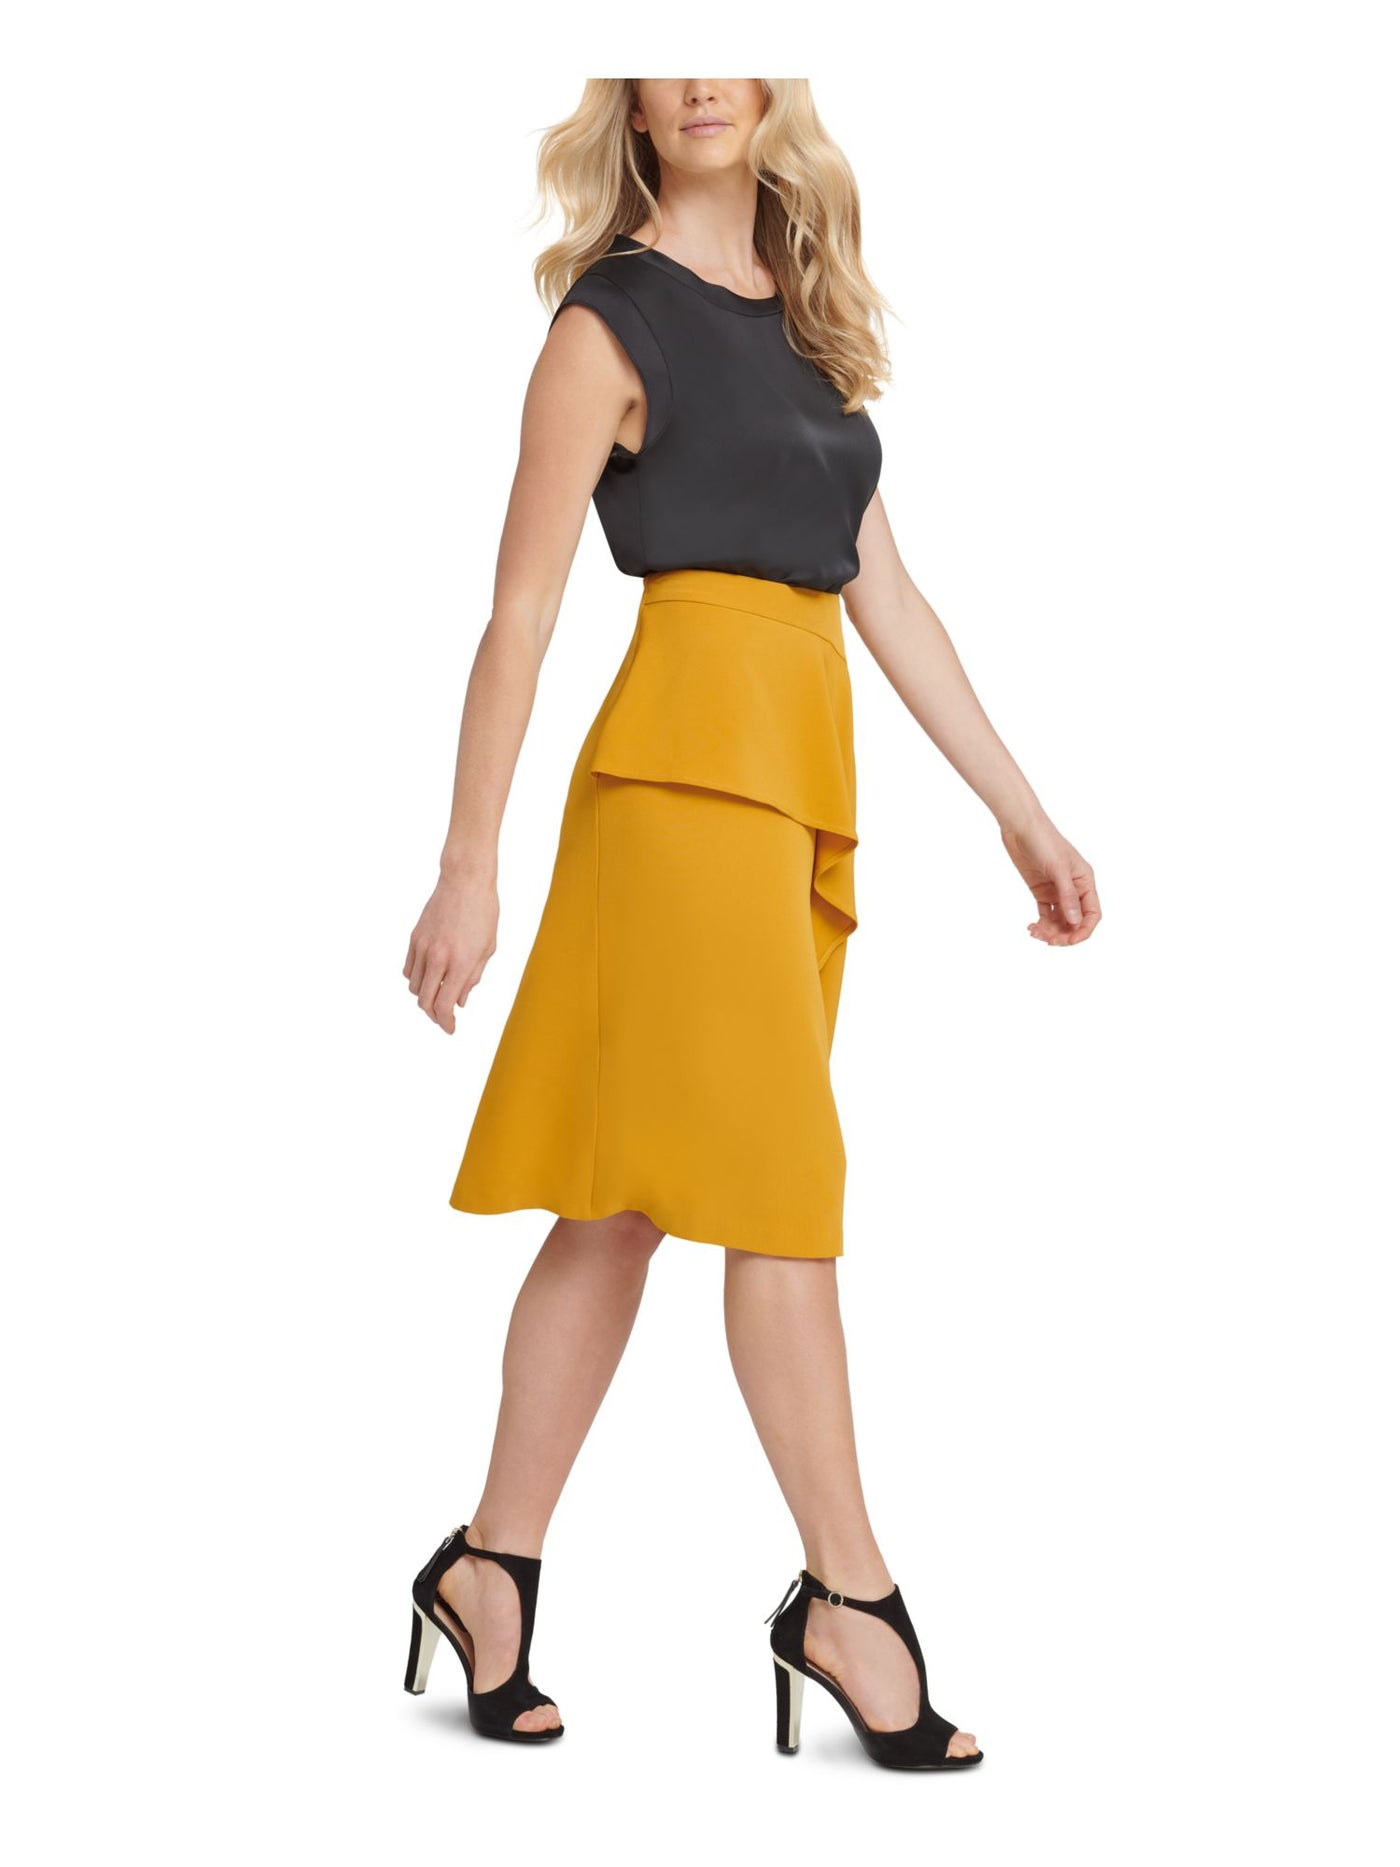 DKNY Womens Gold Ruffled Below The Knee Wear To Work A-Line Skirt 0